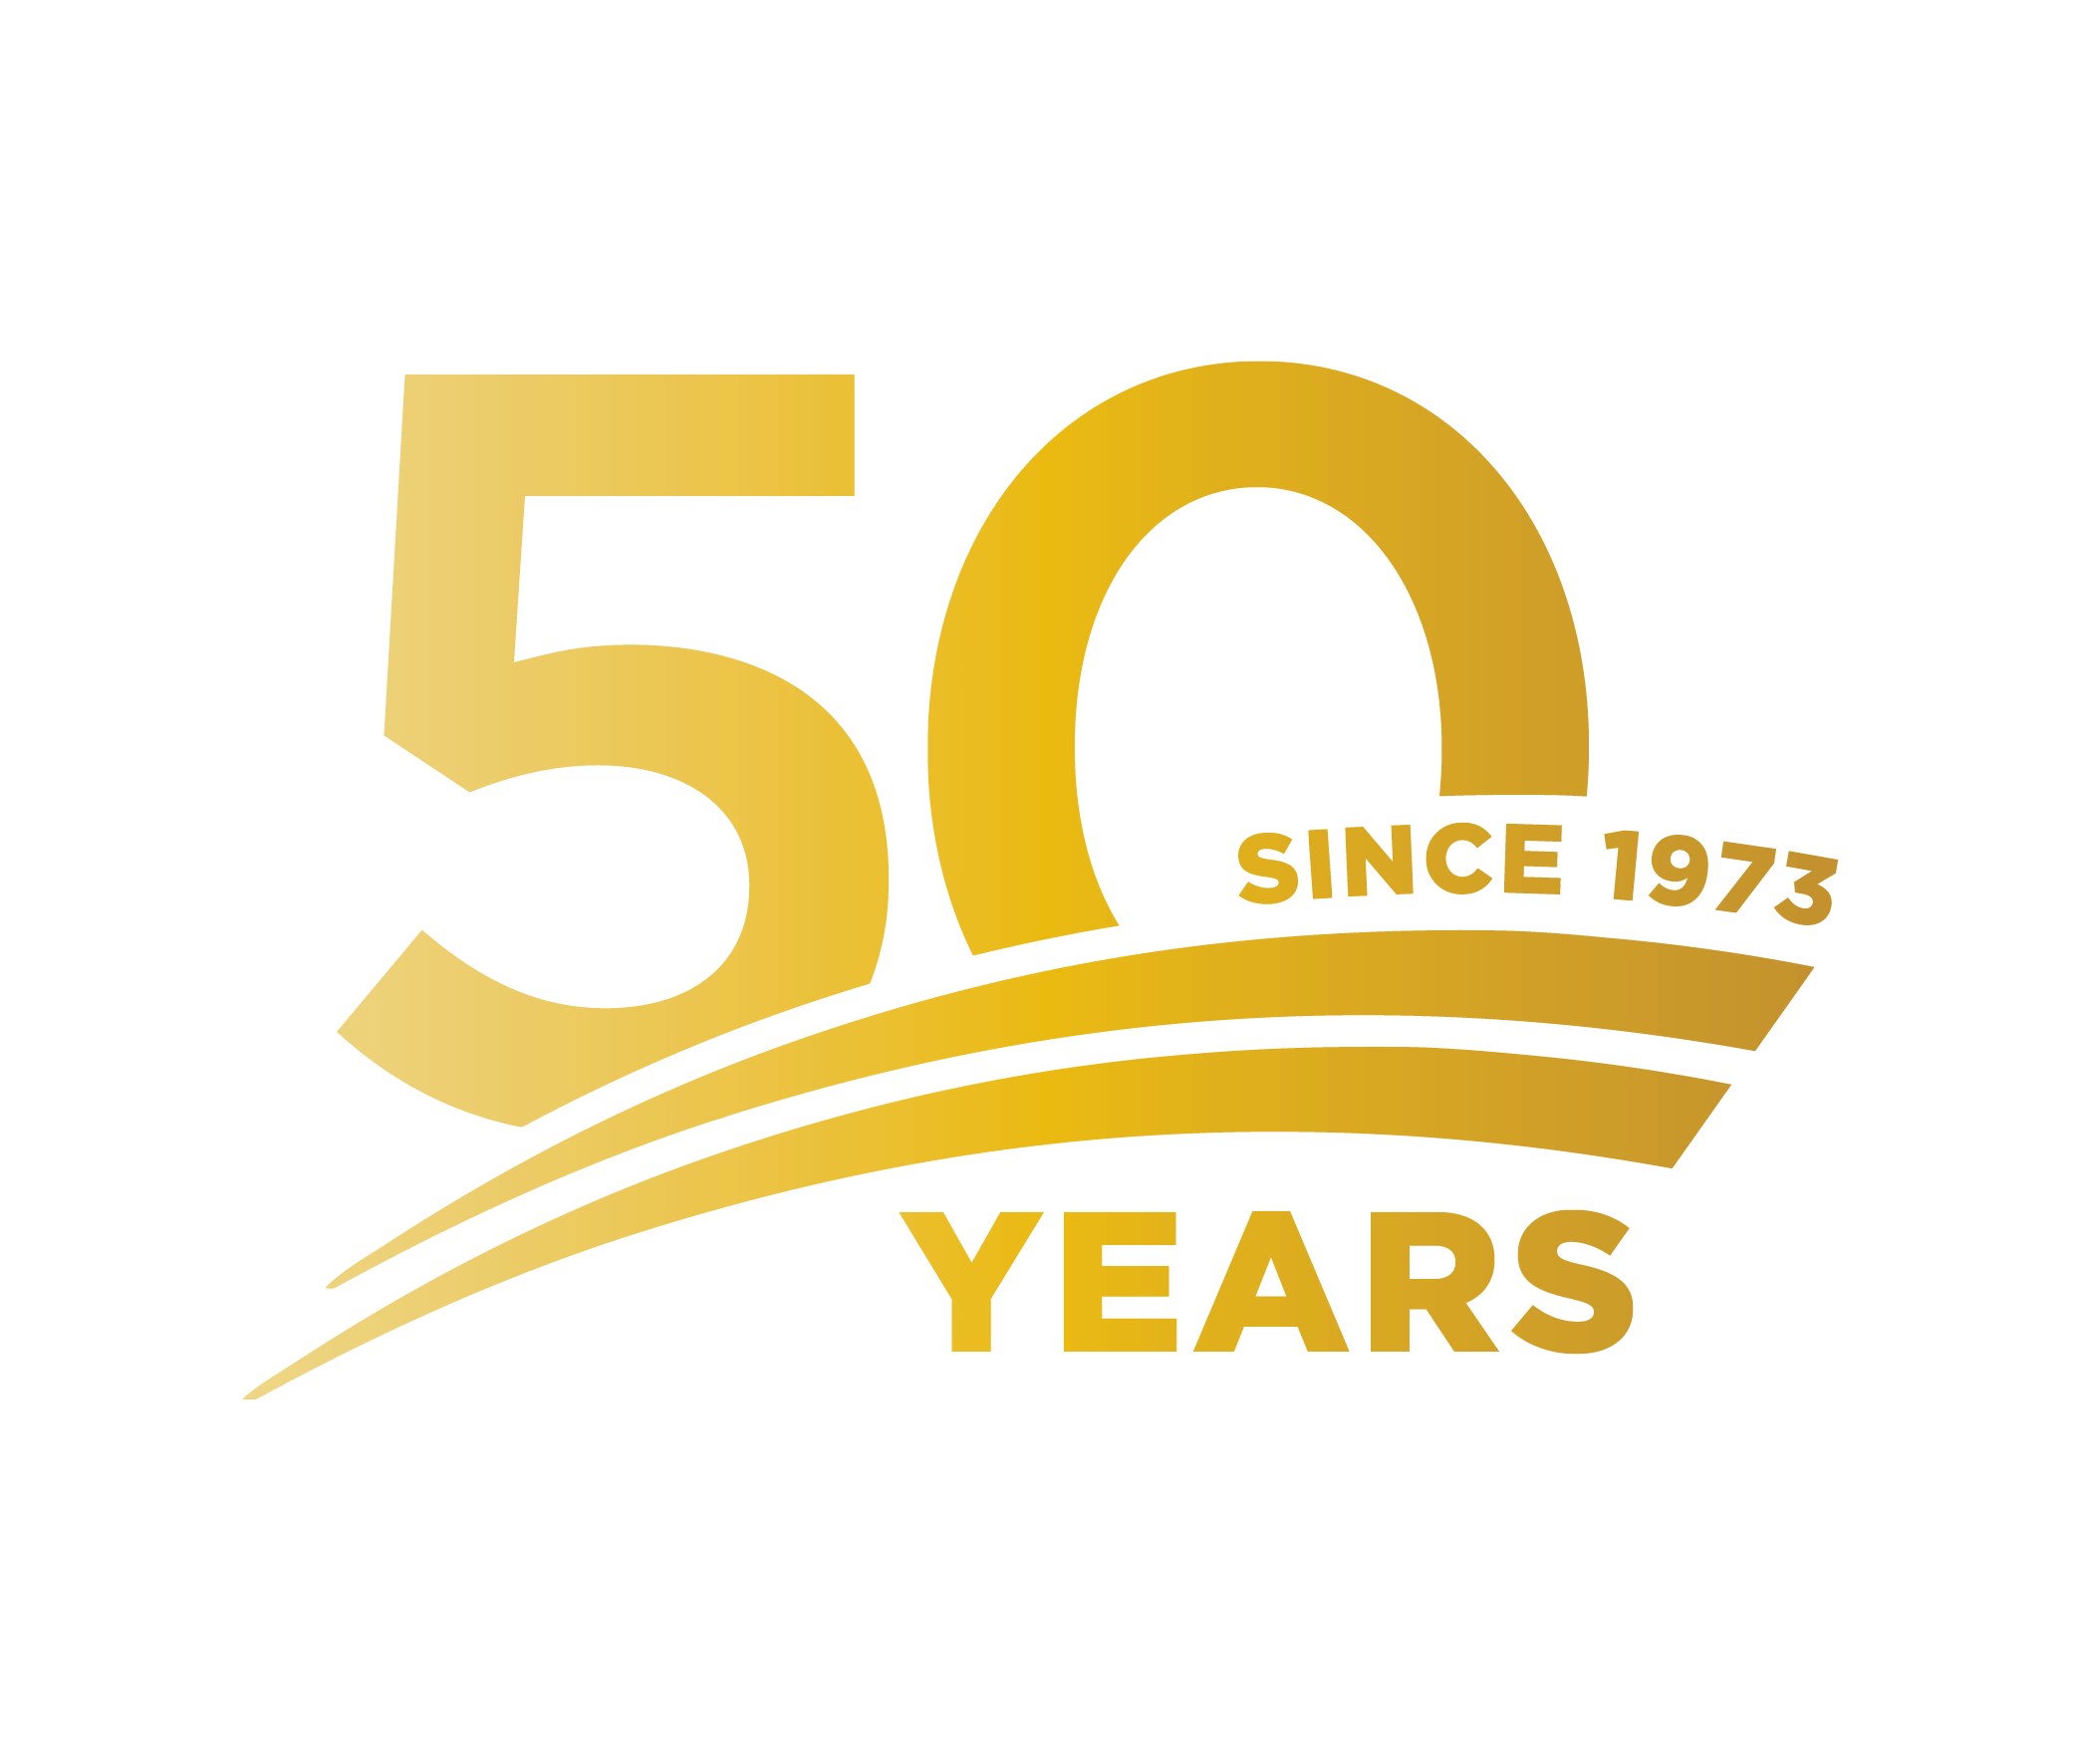 50 Years Since 1973 - Nashville Transportation & Warehousing